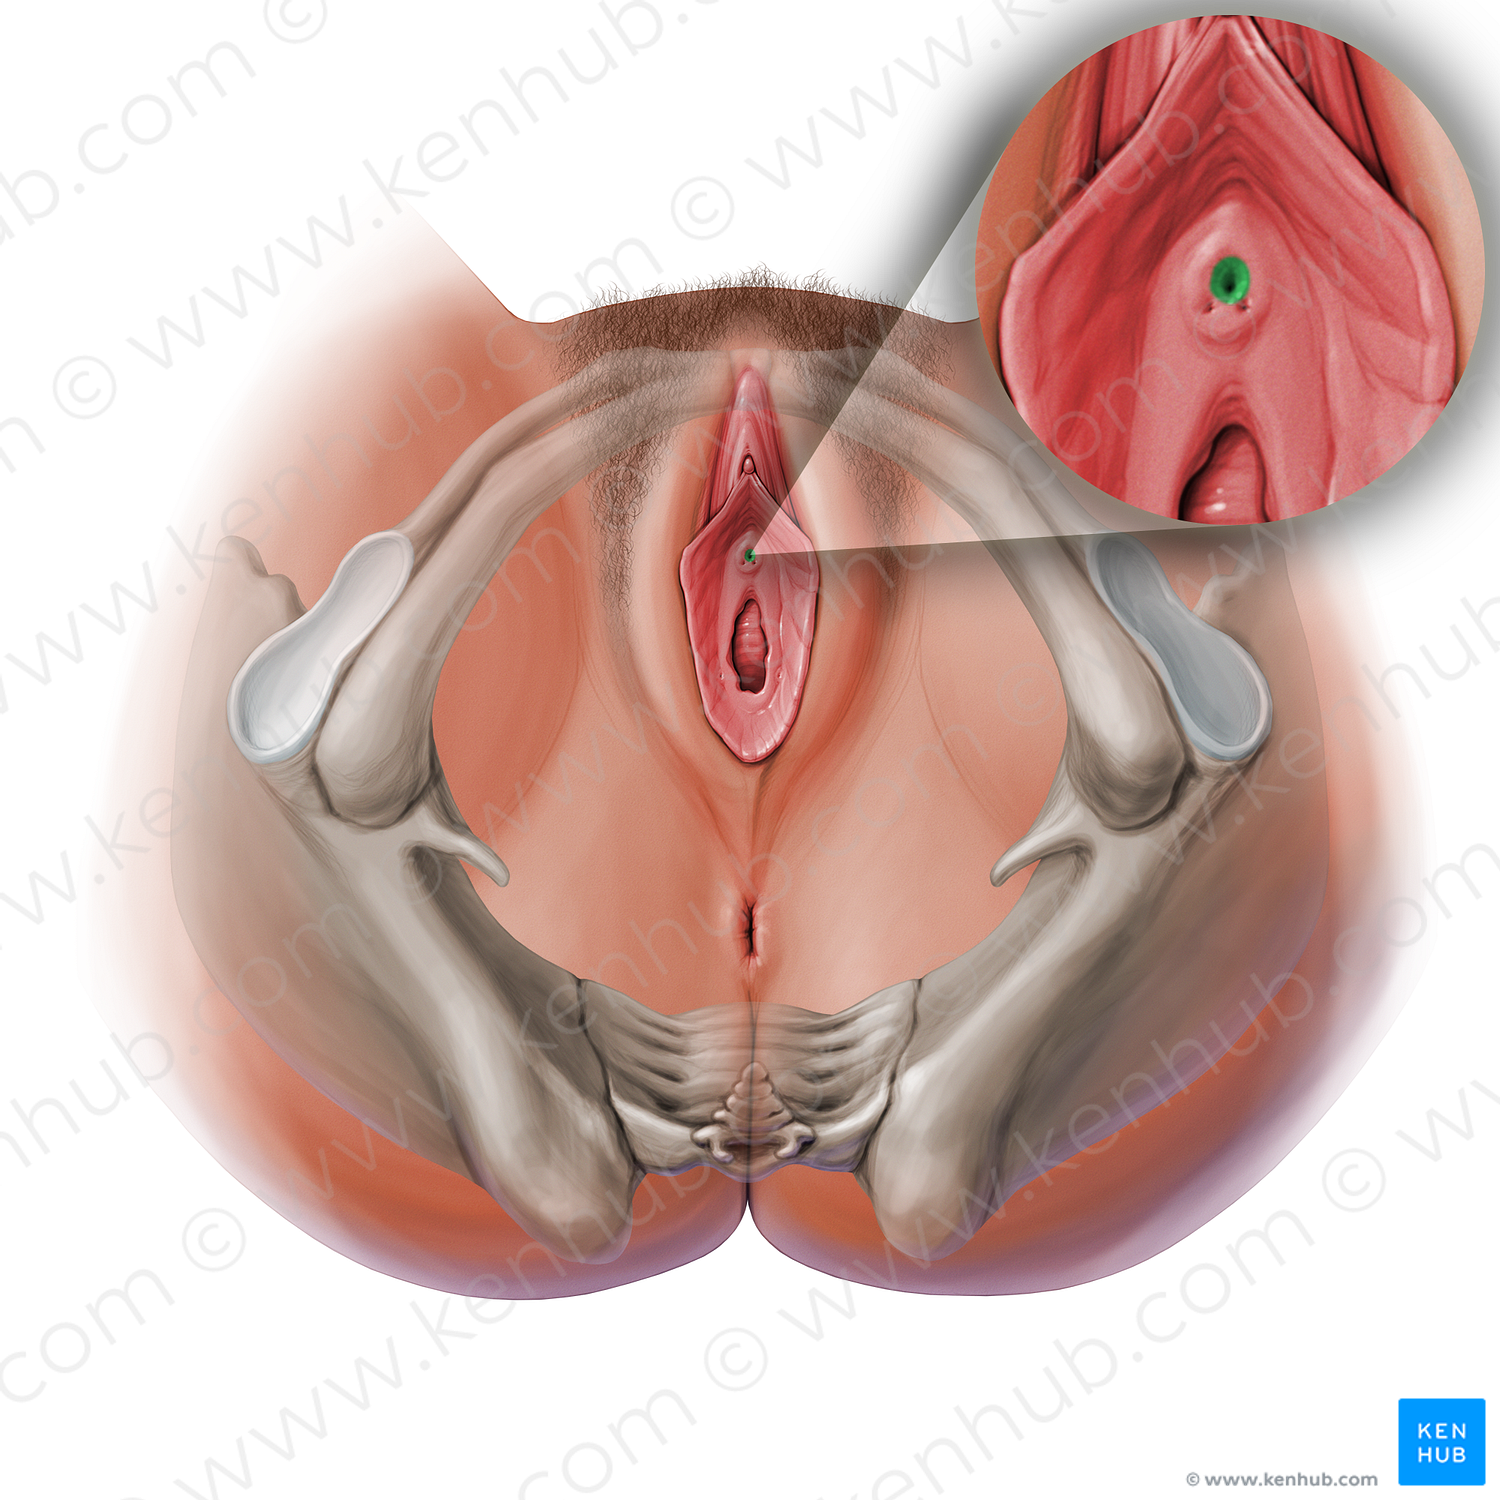 External orifice of urethra (#13616)